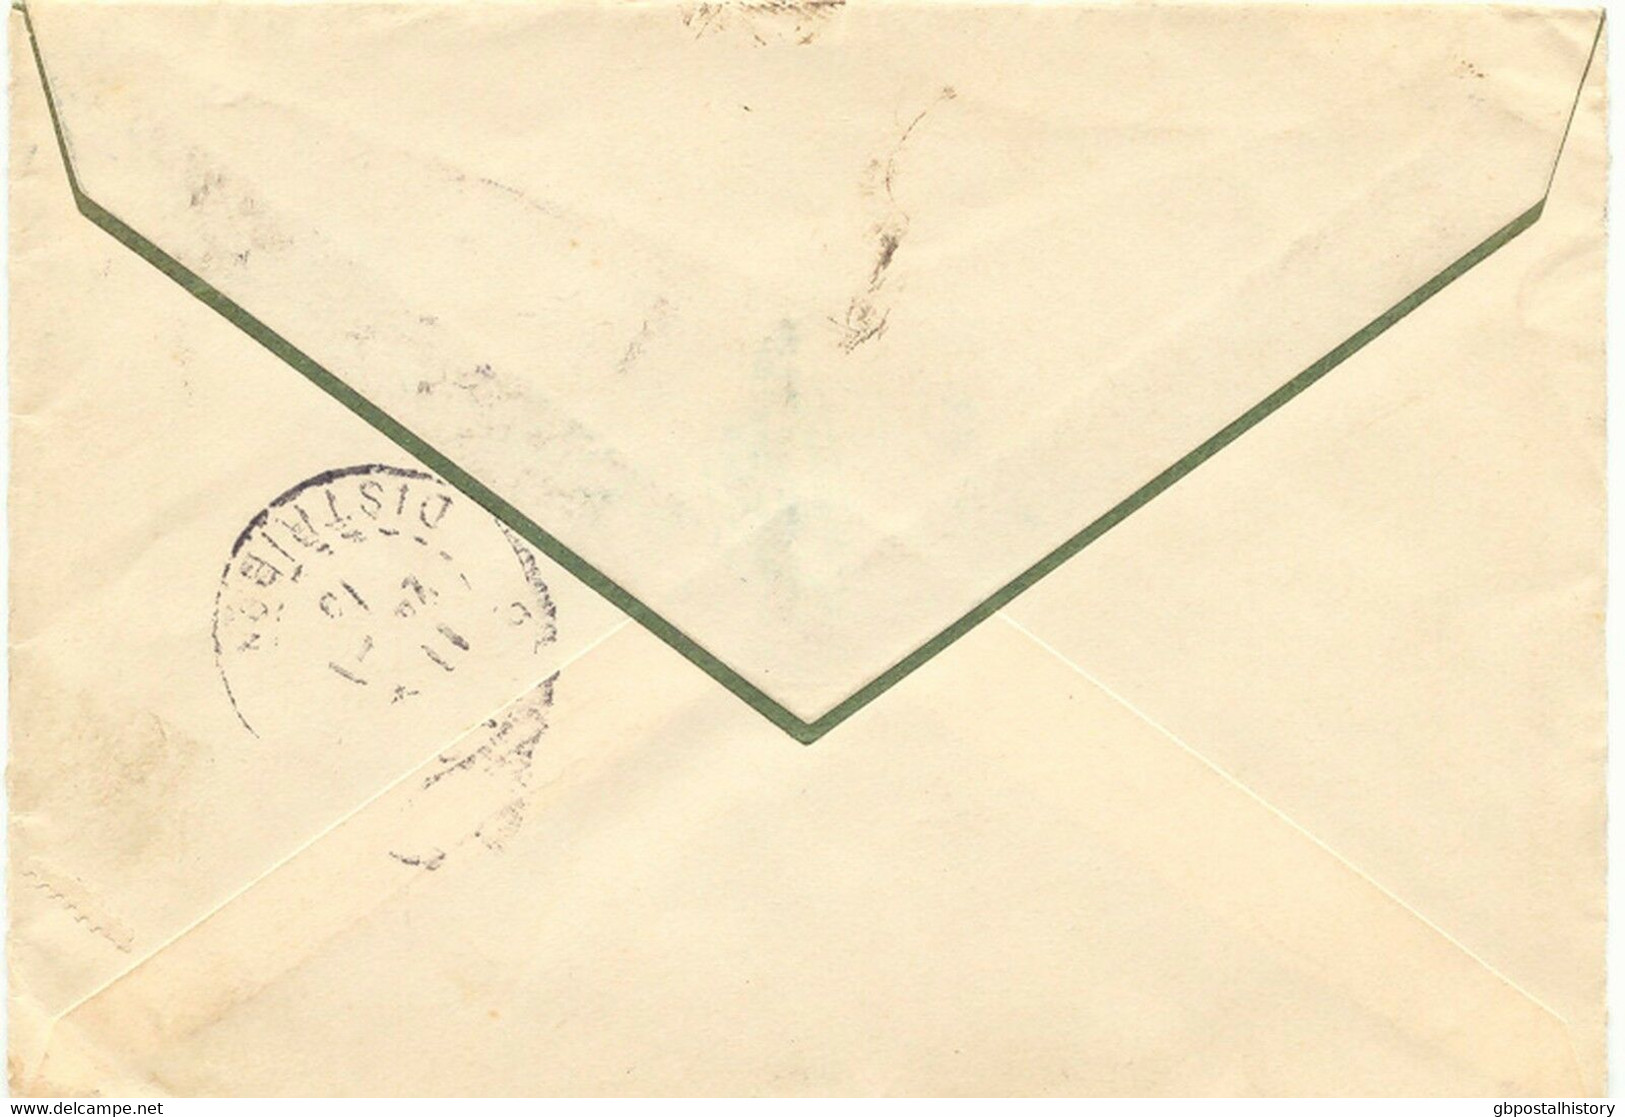 MOROCCO 1915, “Corps D’Occupation De L’Amalat D‘Oudjda”, Red Straight Line - Briefe U. Dokumente